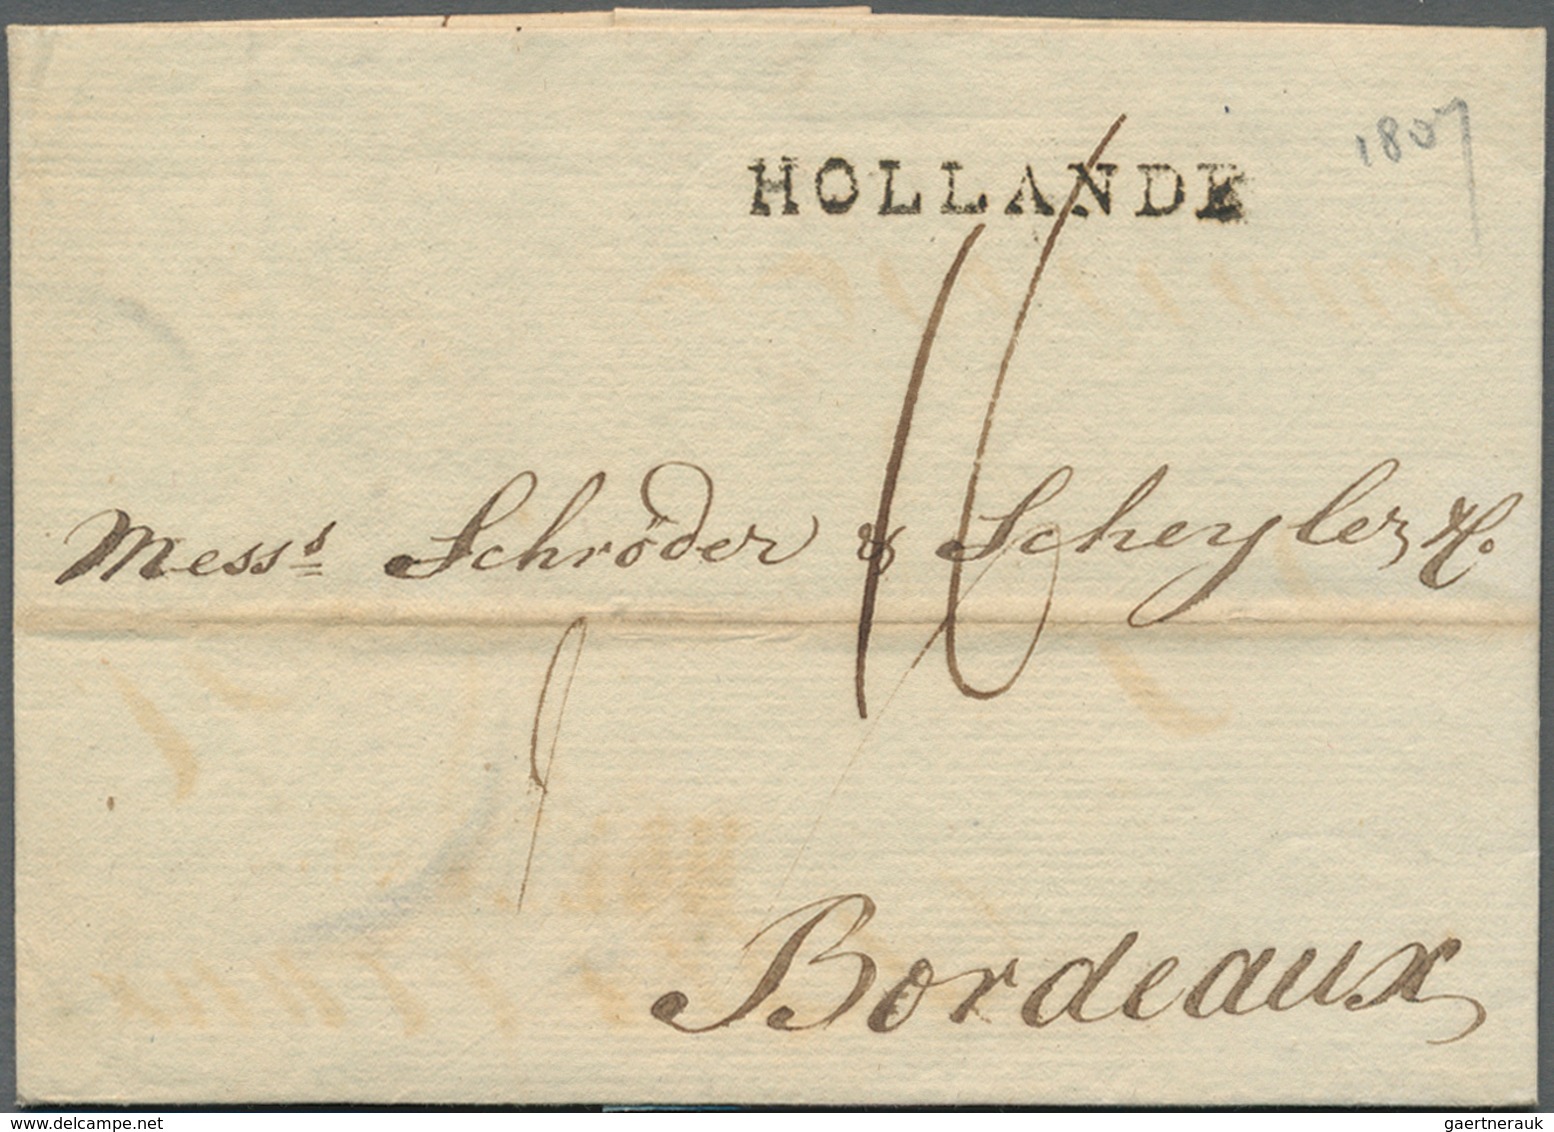 28549 Europa: 1800/1870, interesting lot of ca. 38 folded letters from BELGIUM (5), NETHERLAND (19), AUSTR